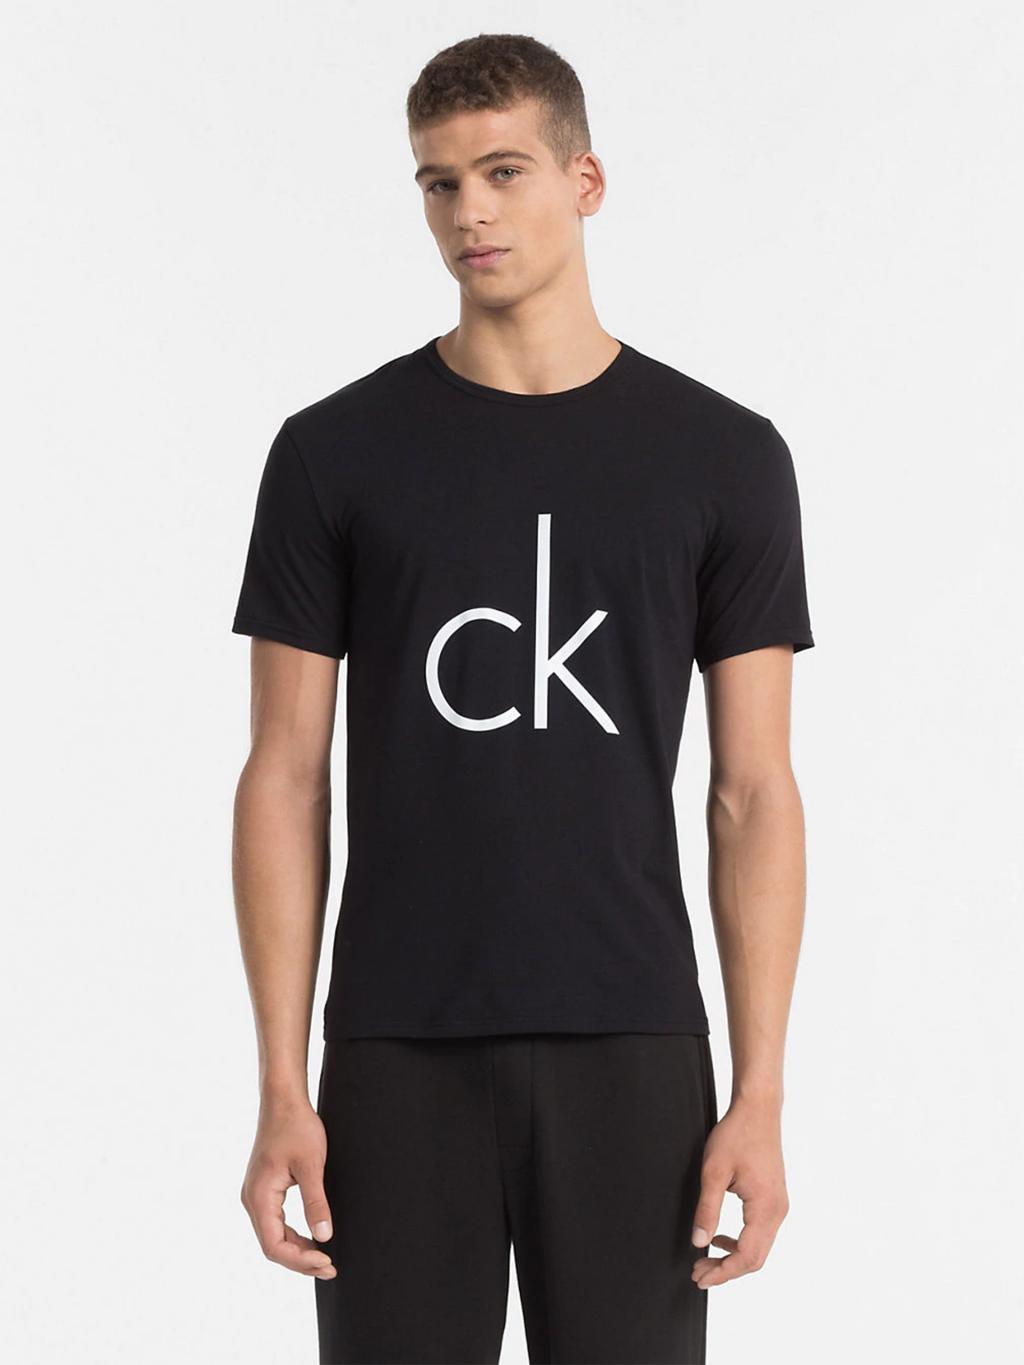 NB1164 - pánské triko Calvin Klein